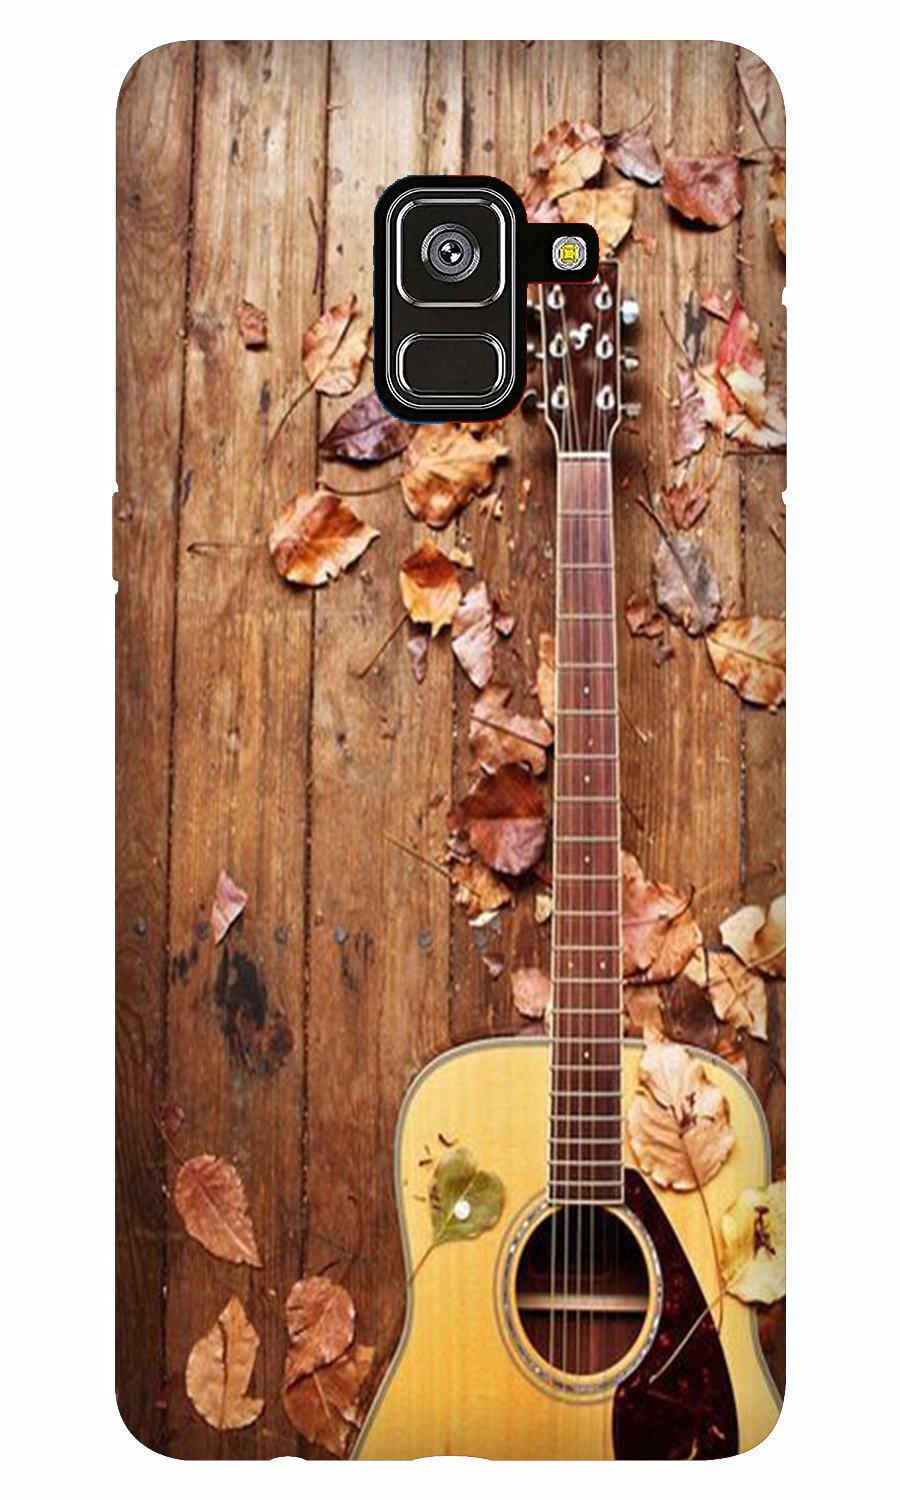 Guitar Case for Galaxy A5 (2018)